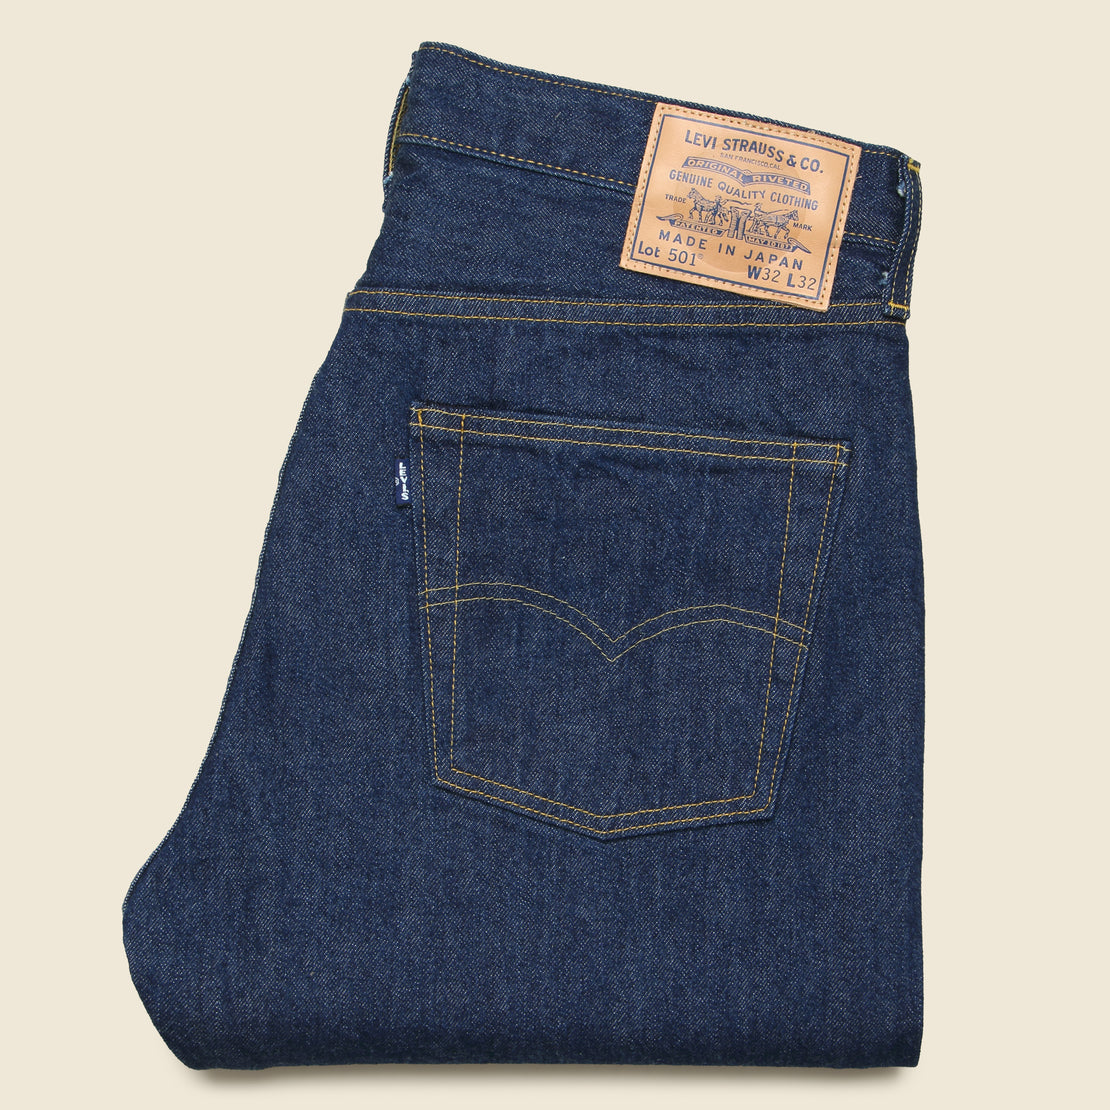 1980s 501 Jean - Dark Rigid - Levi's Made in Japan - STAG Provisions - Pants - Denim